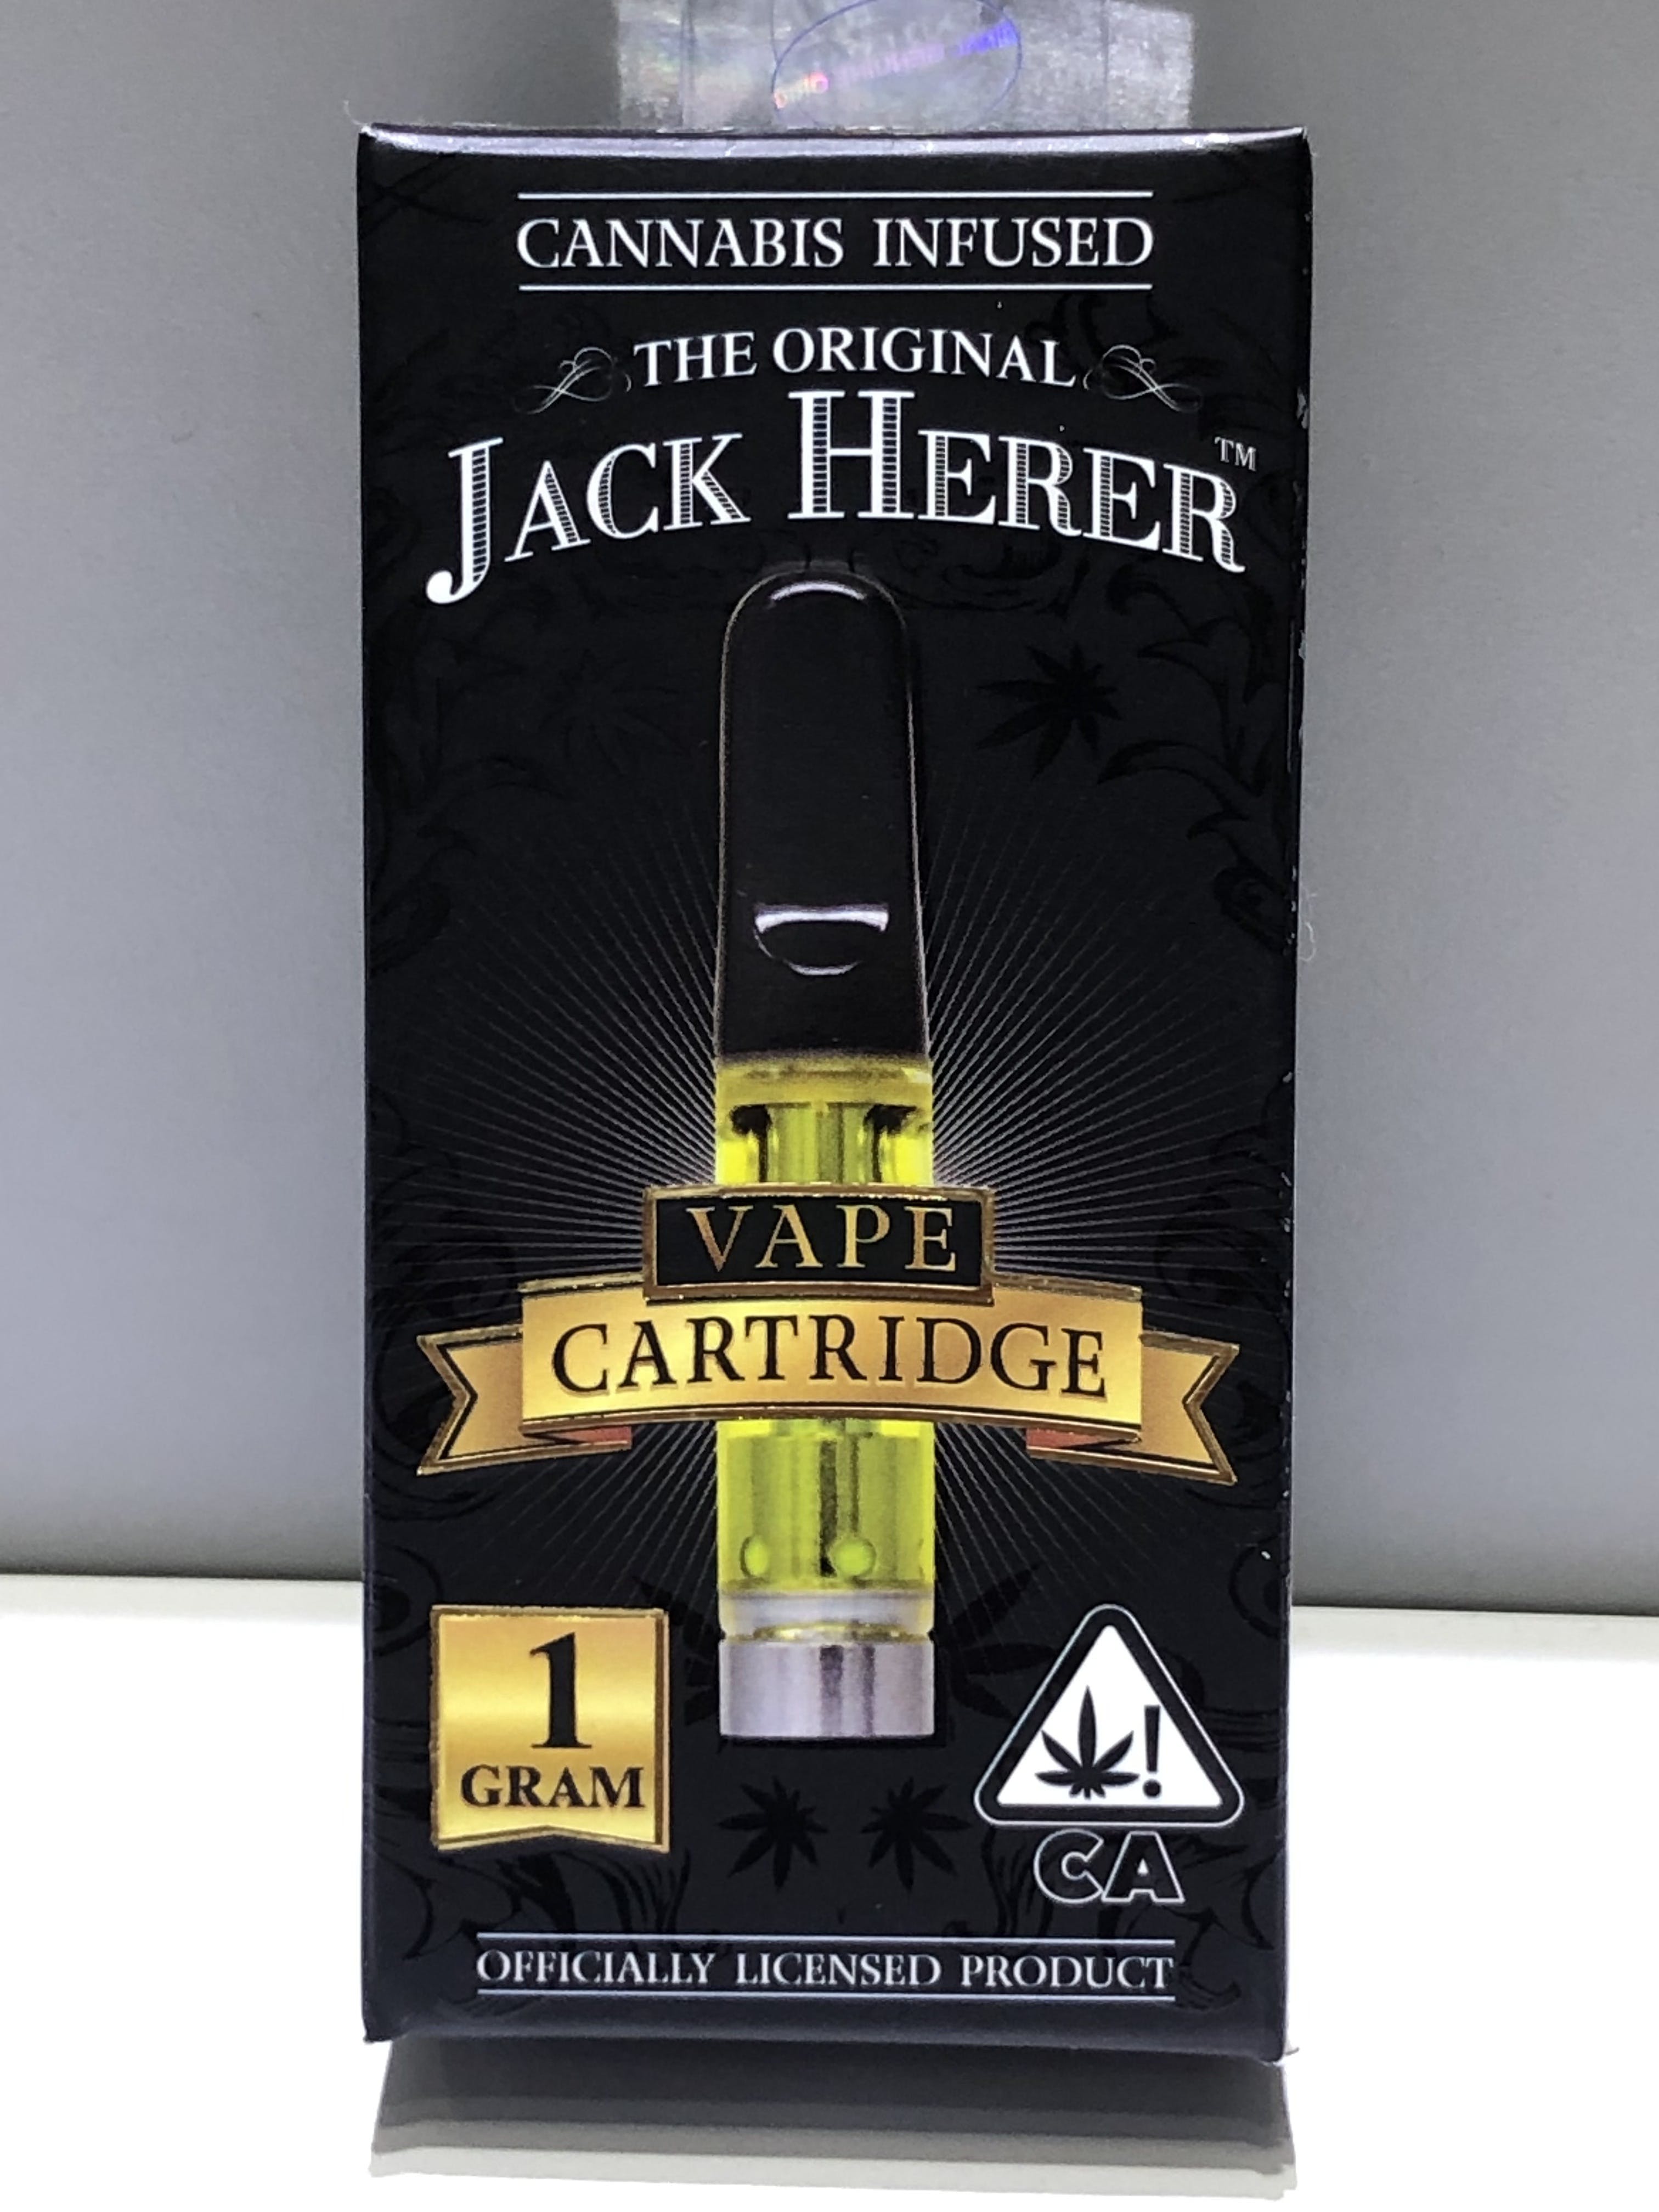 The Original Jack Herer Cartridge